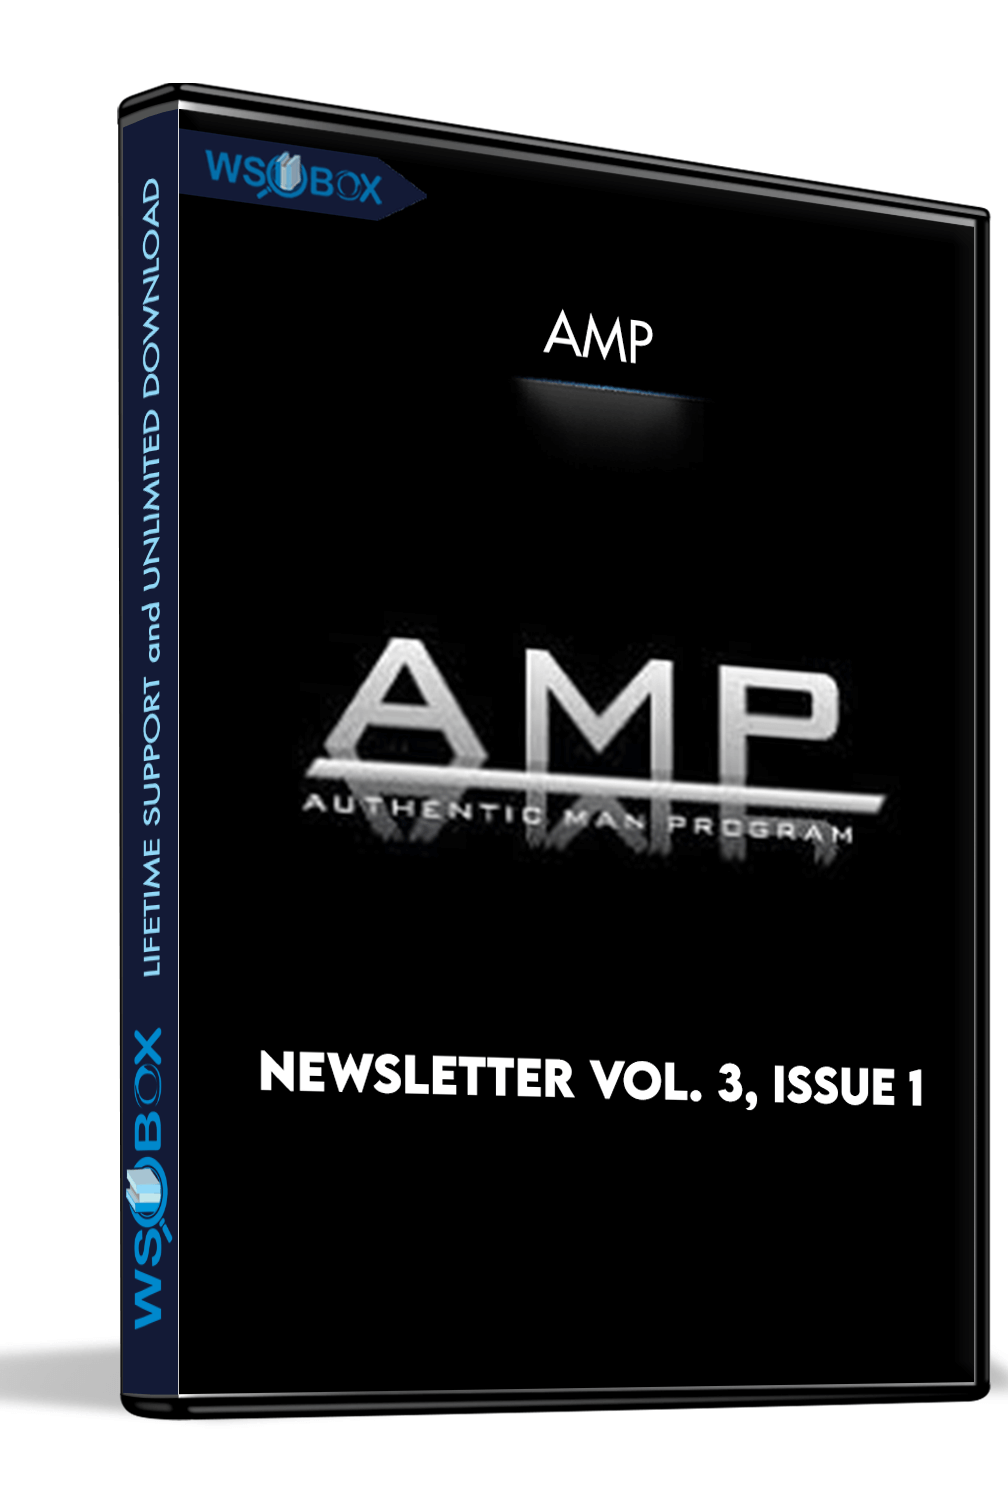 newsletter-vol-3-issue-1-amp